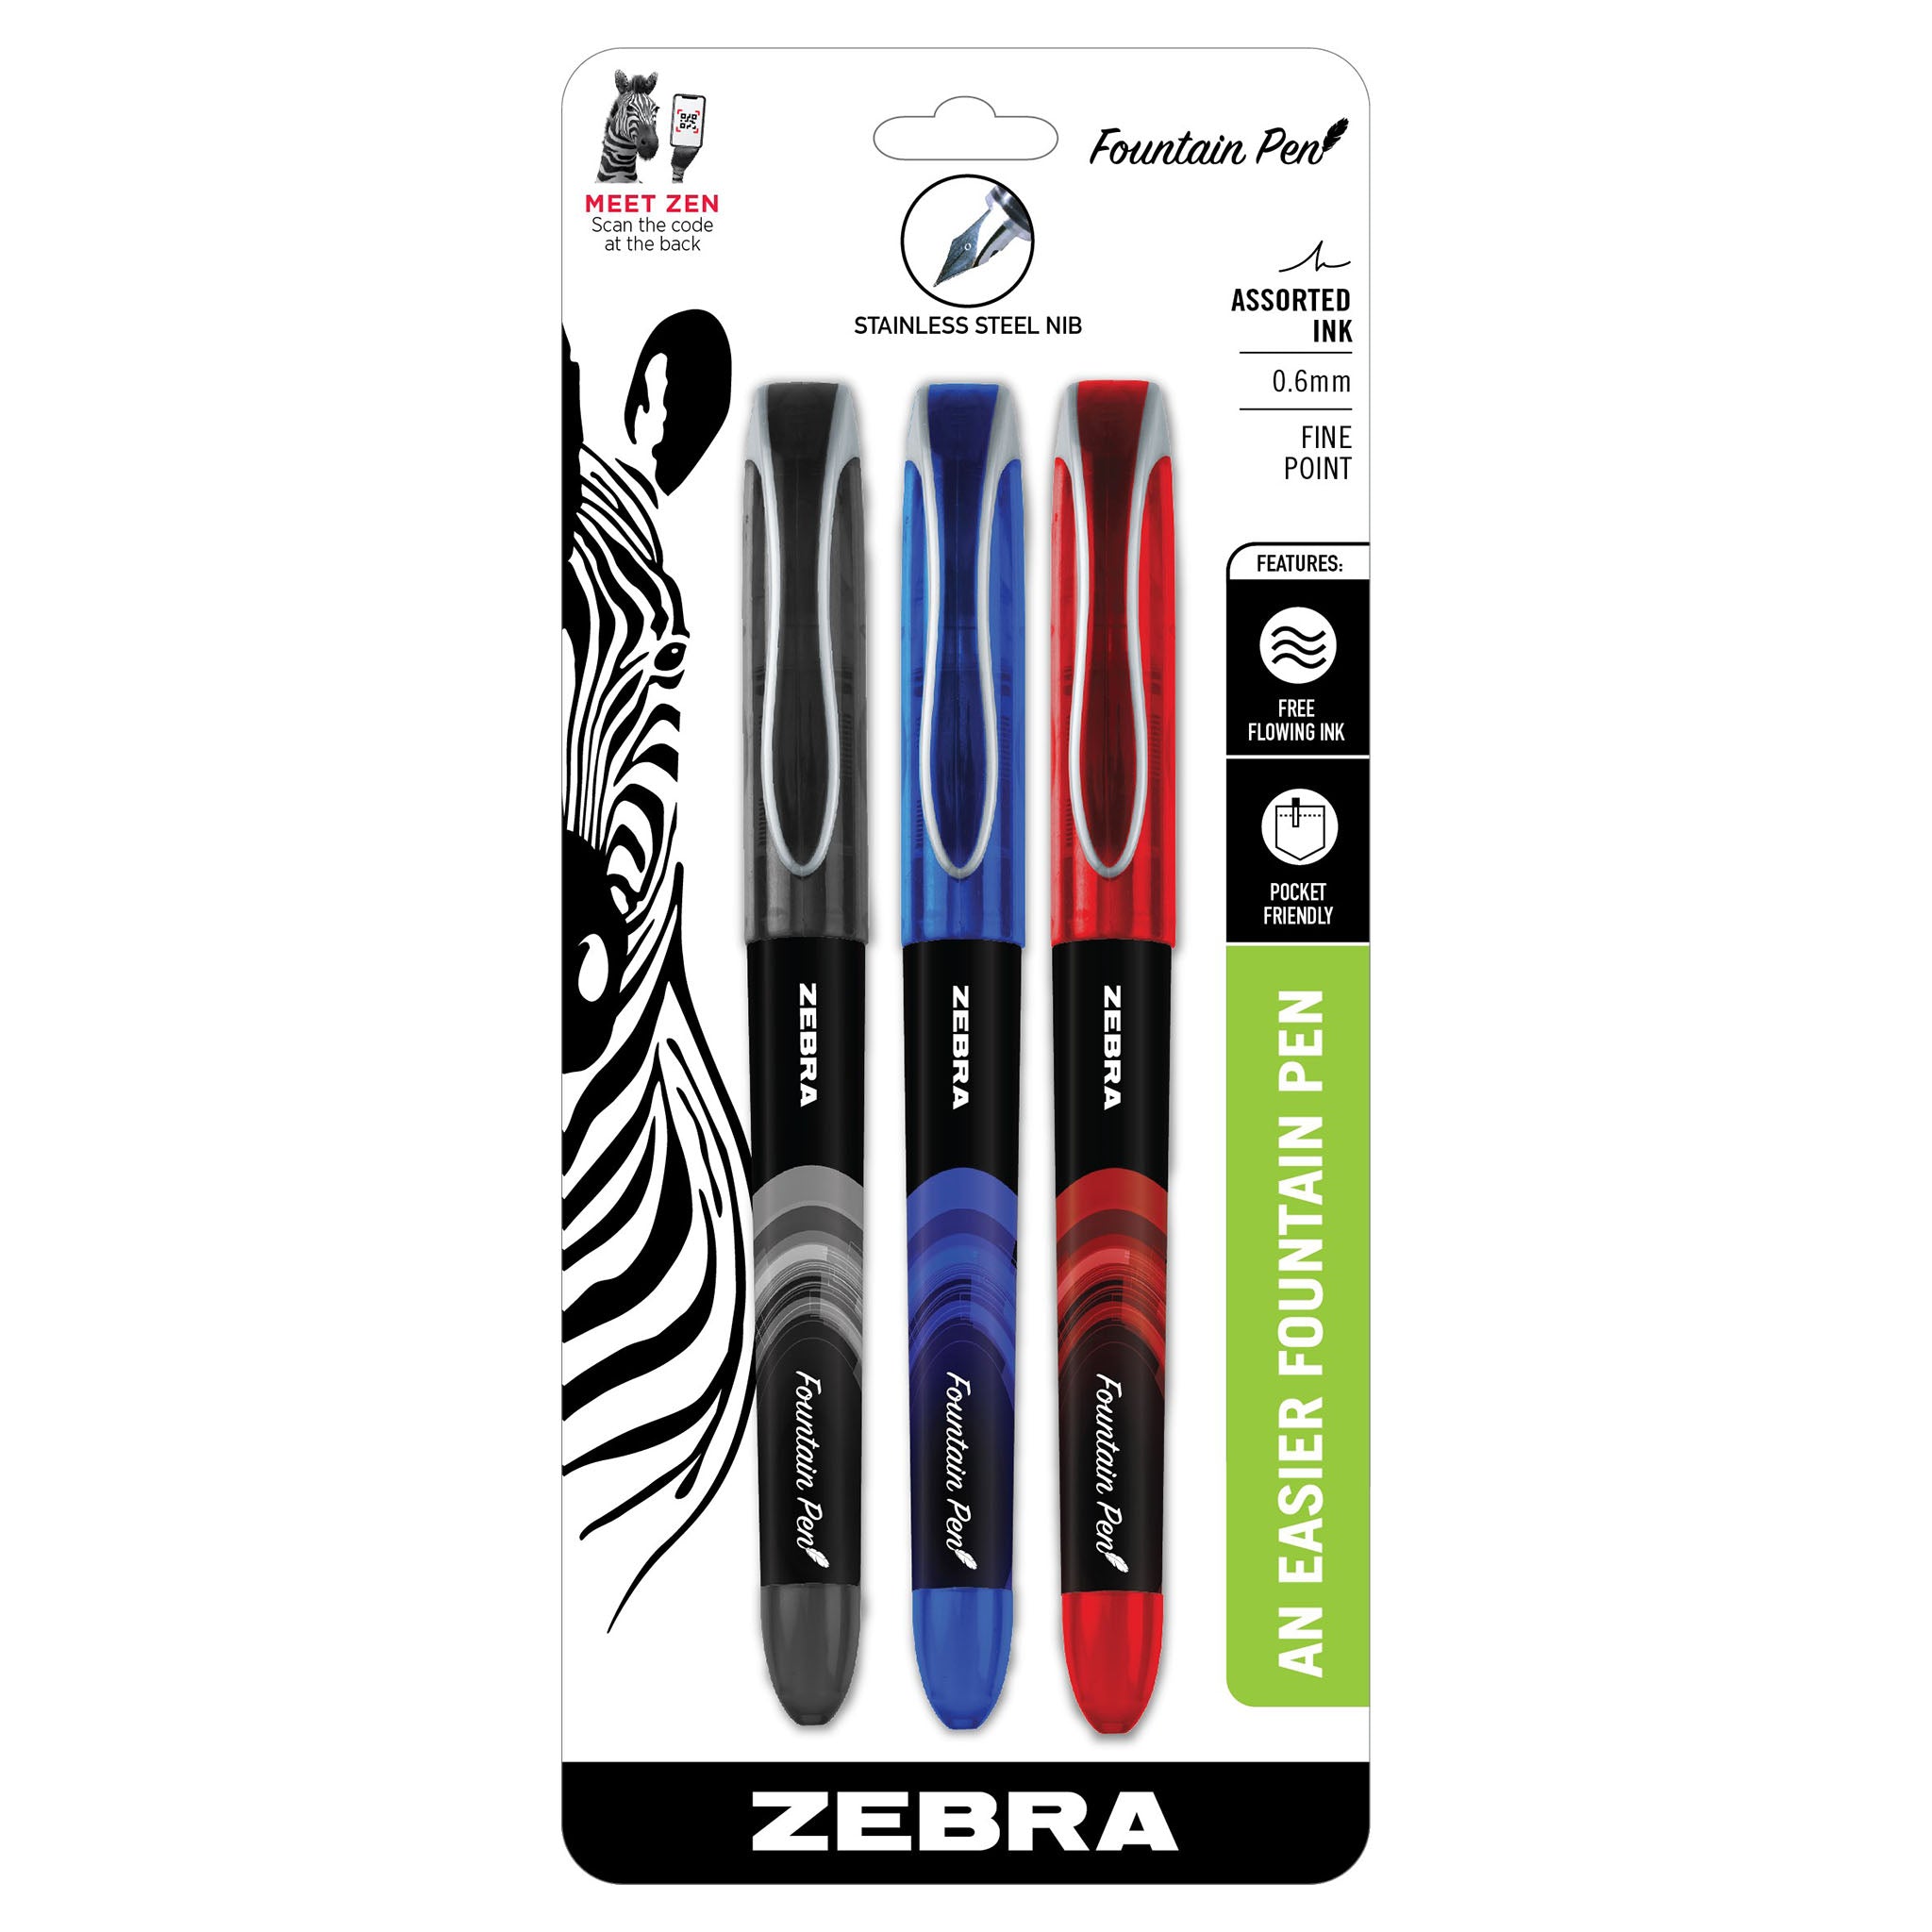 ZEBRA Brand Fountain Pen